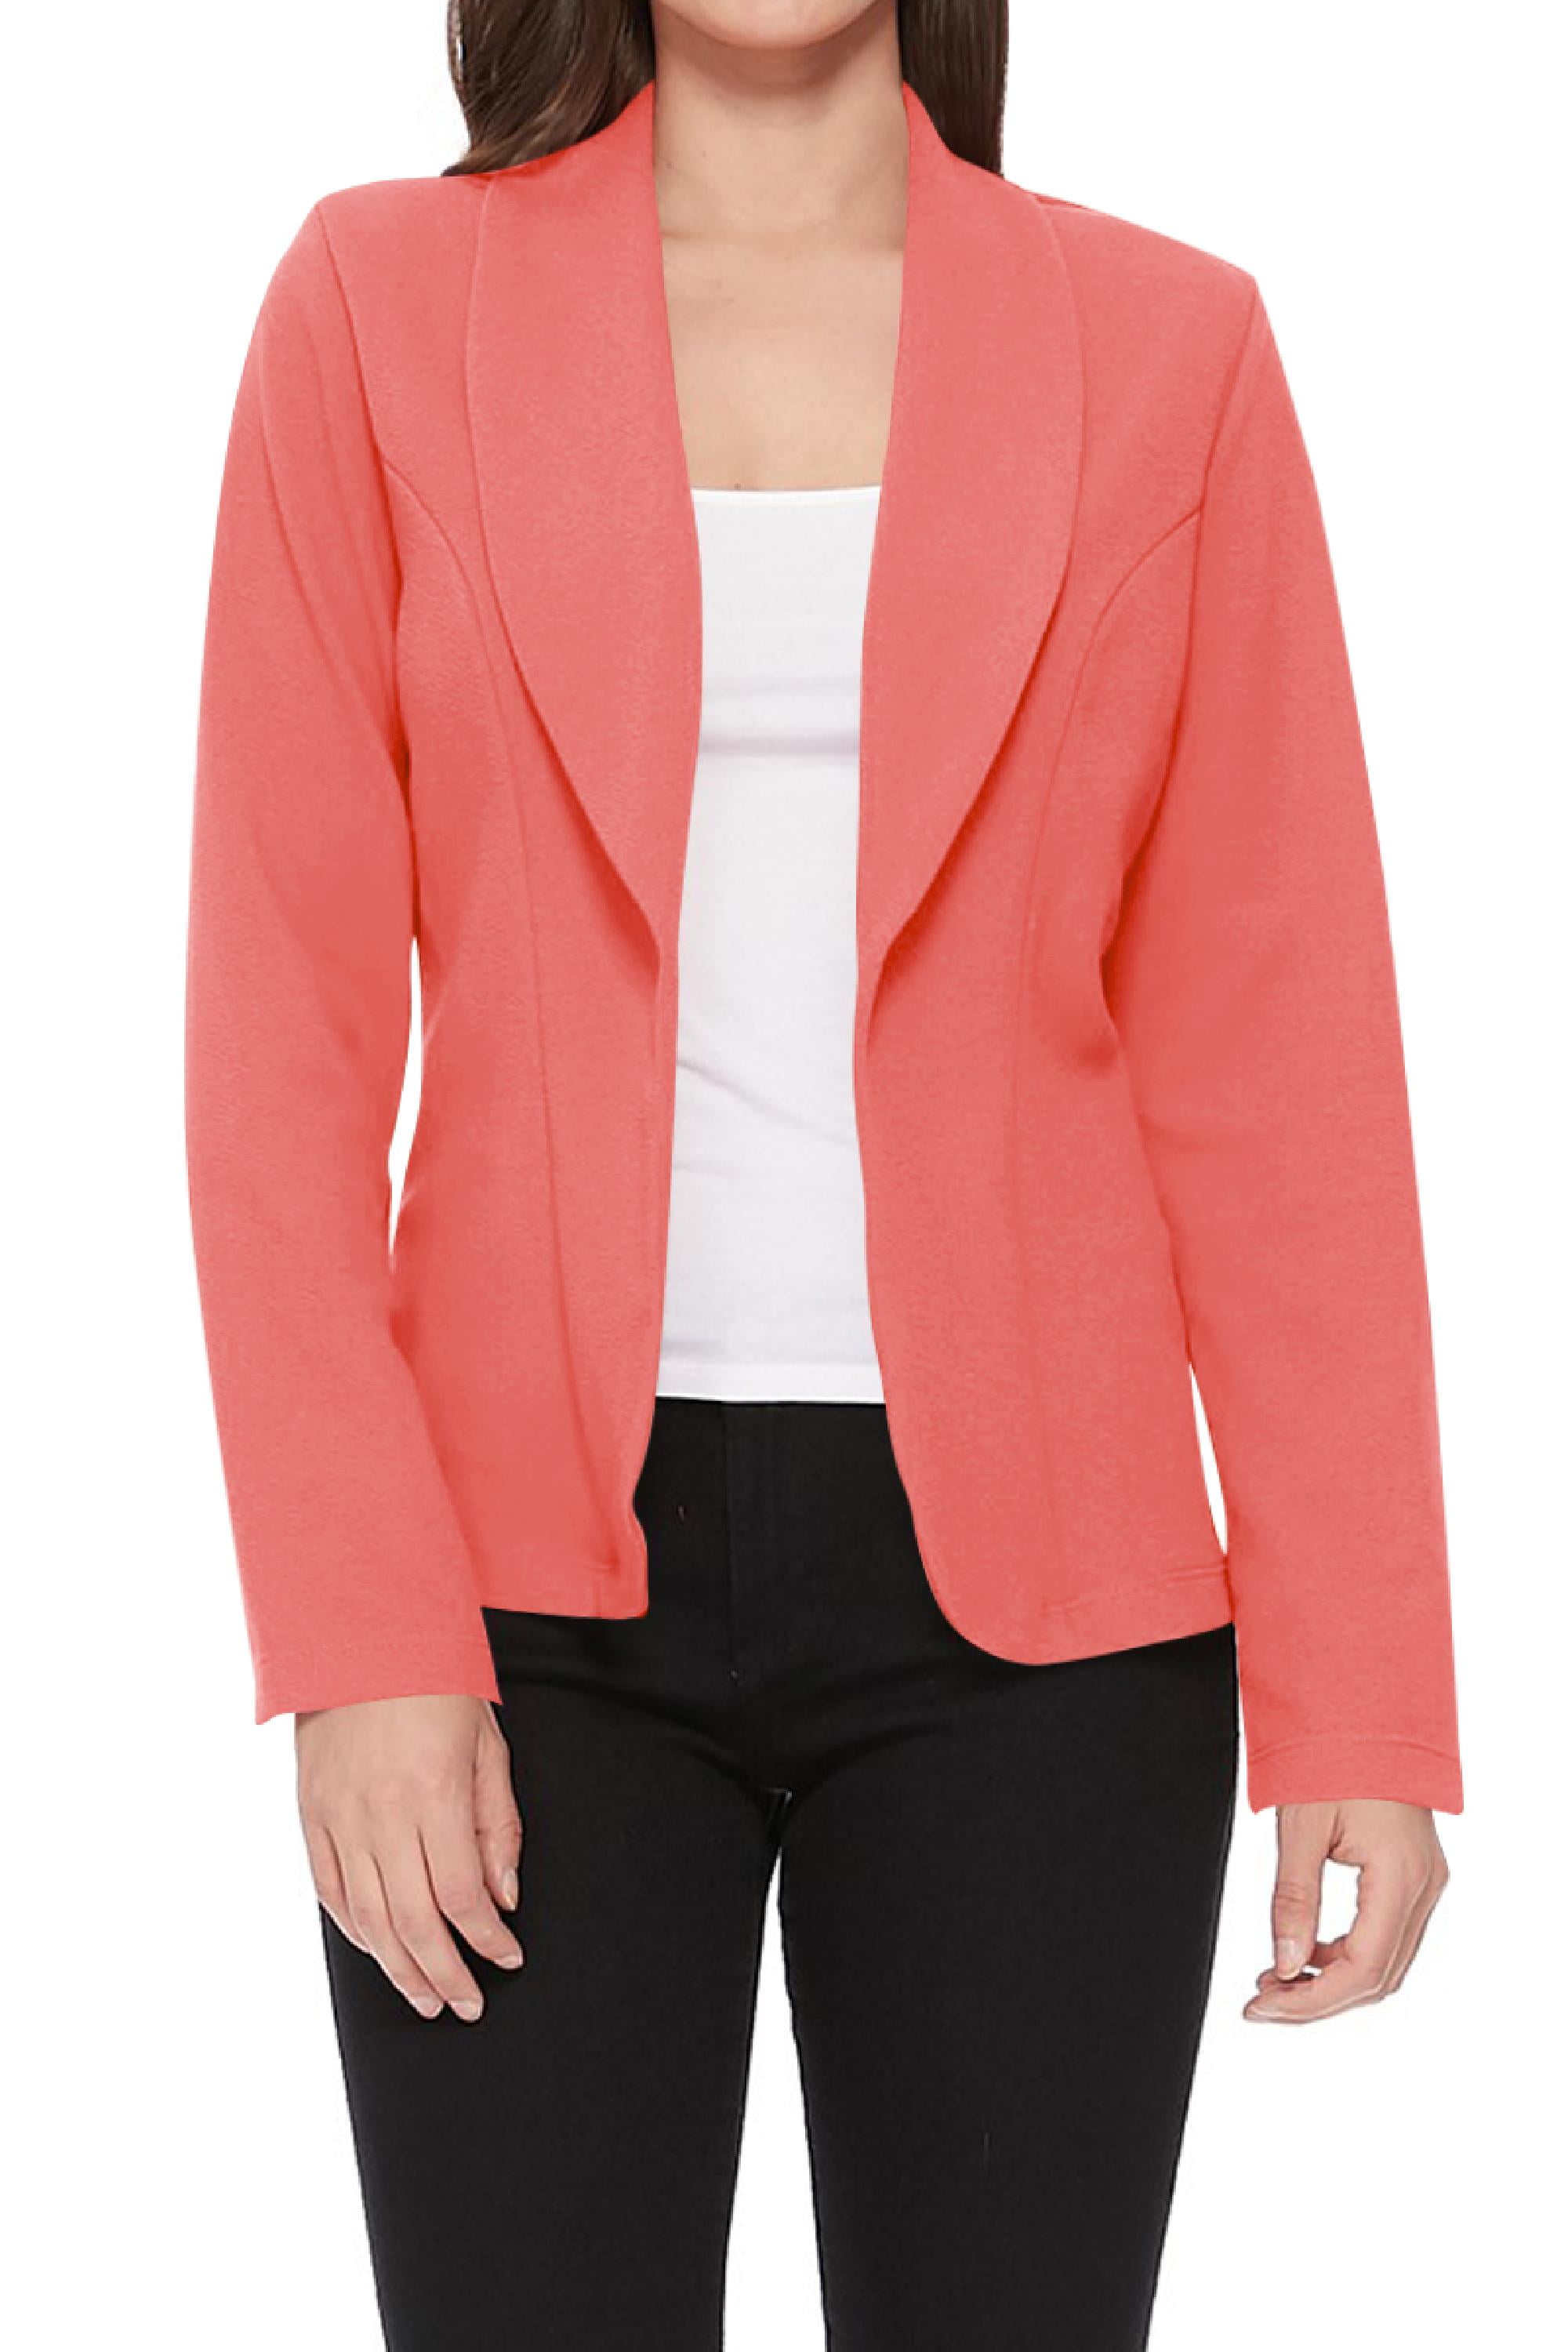 Women's Solid Basic Casual Open Front Long Sleeve Outerwear Blazer Jacket S-3XL 